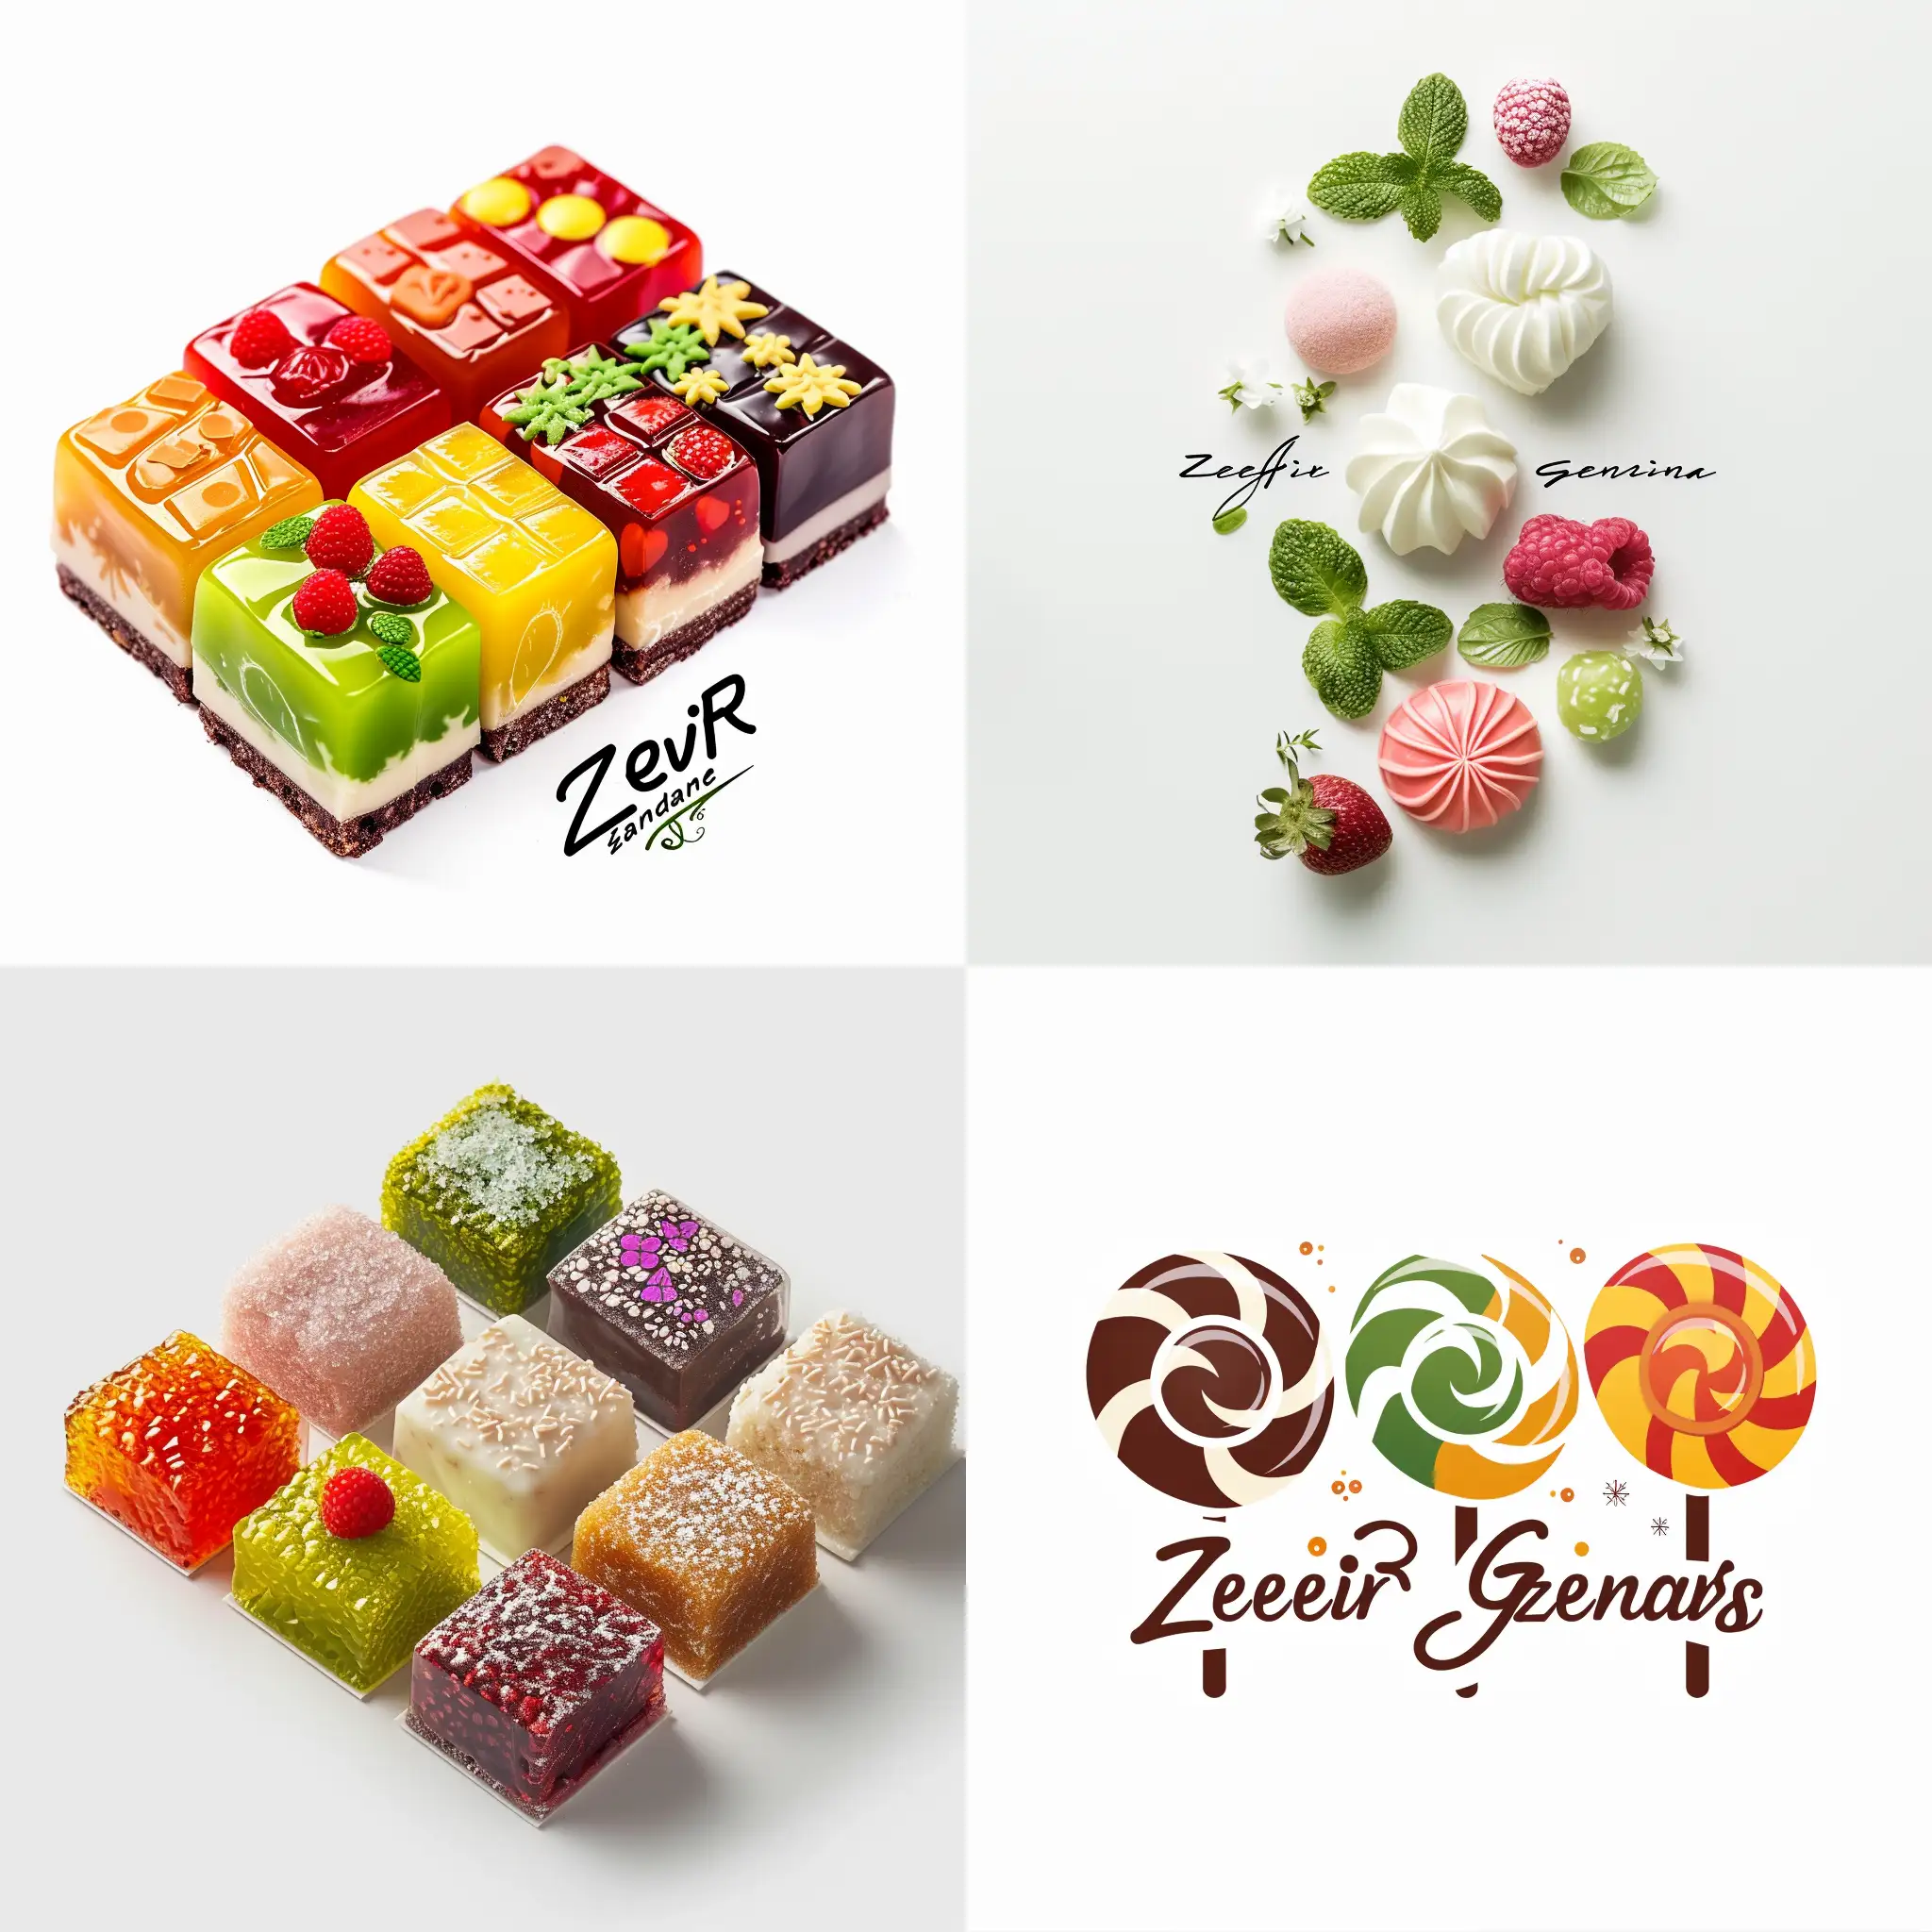 confectionery, name "Zefir garden", white background, logo style, minimal, fla